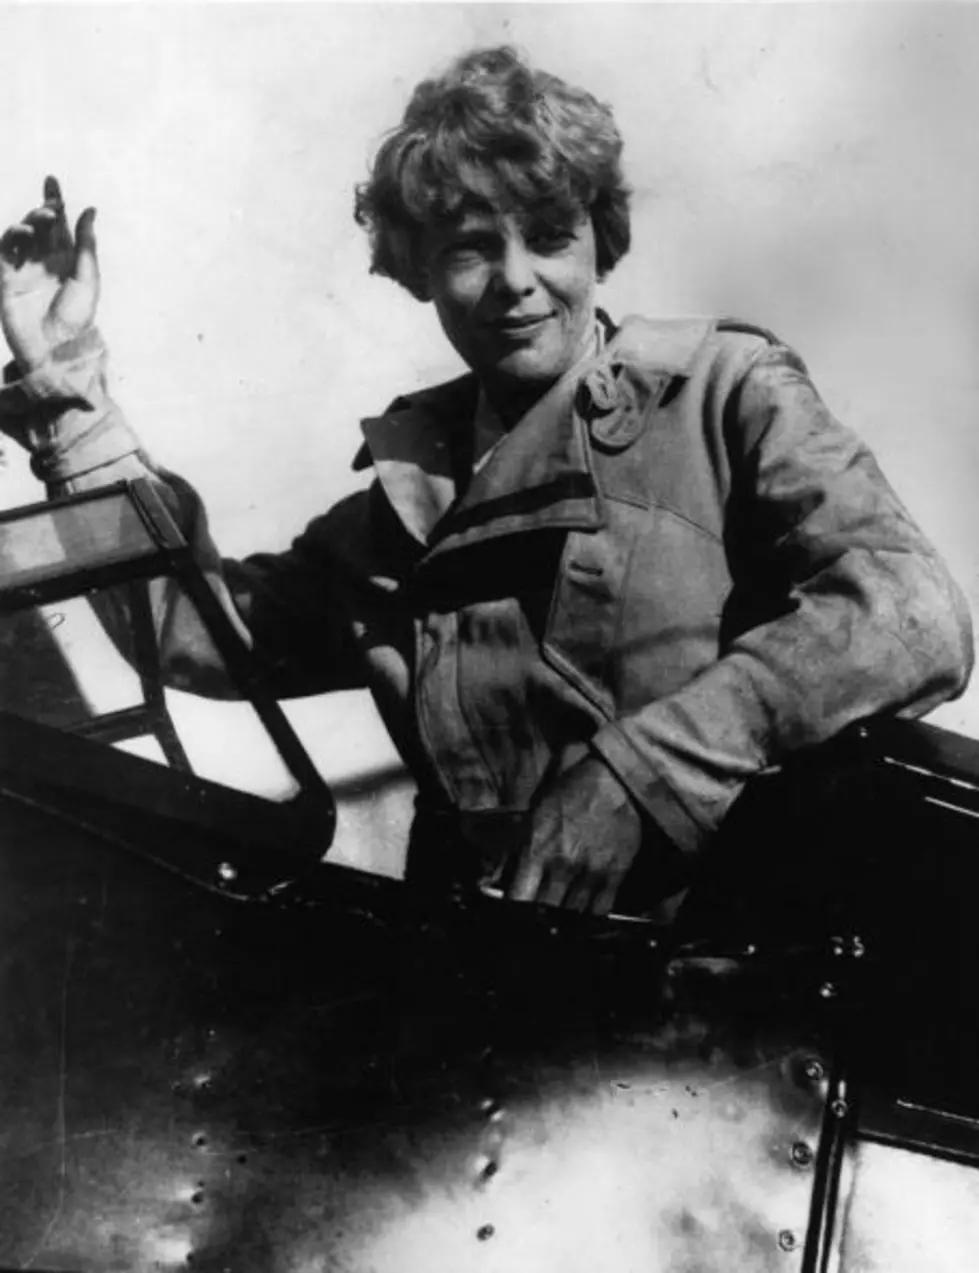 The Fantastic Machine Amelia Earhart Tested In Wyoming Skies